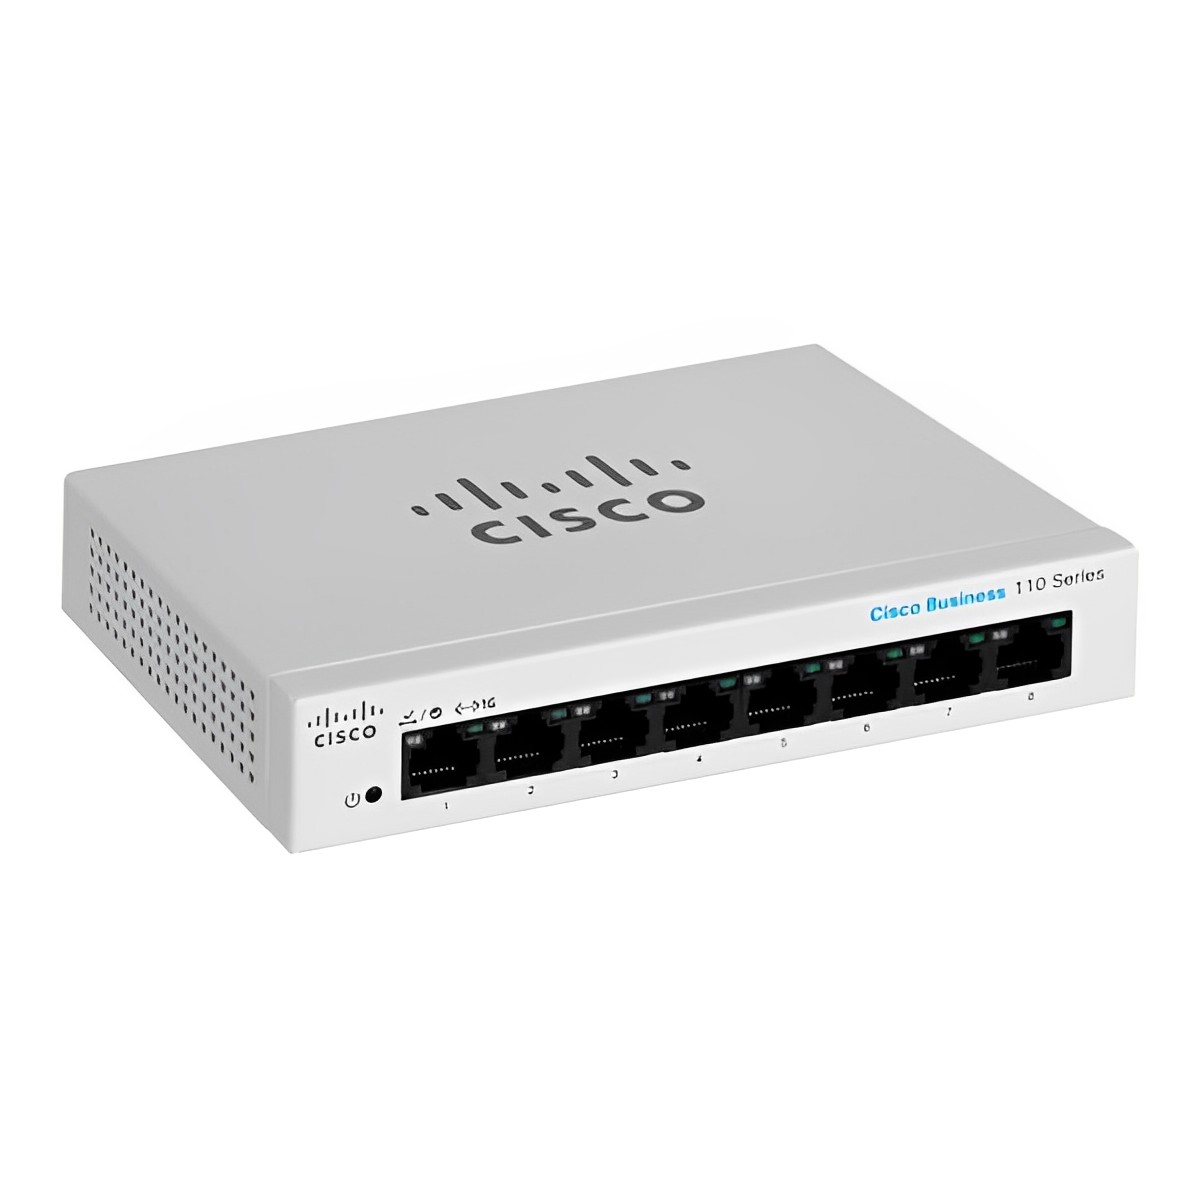 Cisco Business CBS110-8T-D Unmanaged Switch, 8 GE ports, Desktop, External power supply